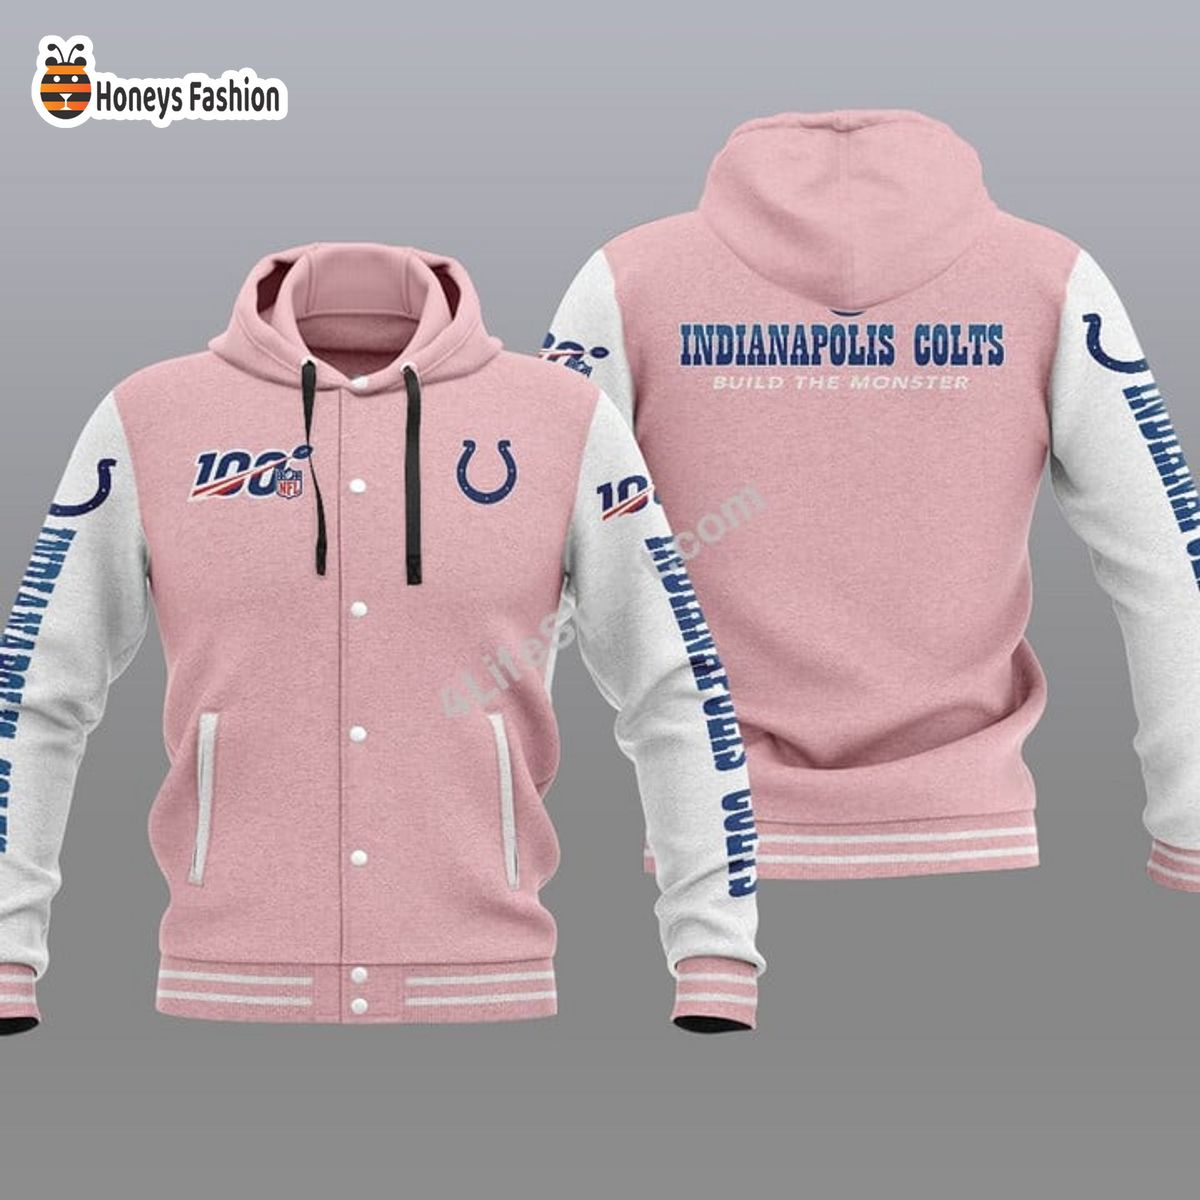 Indianapolis Colts 100th Anniversary Season Hooded Varsity Jacket